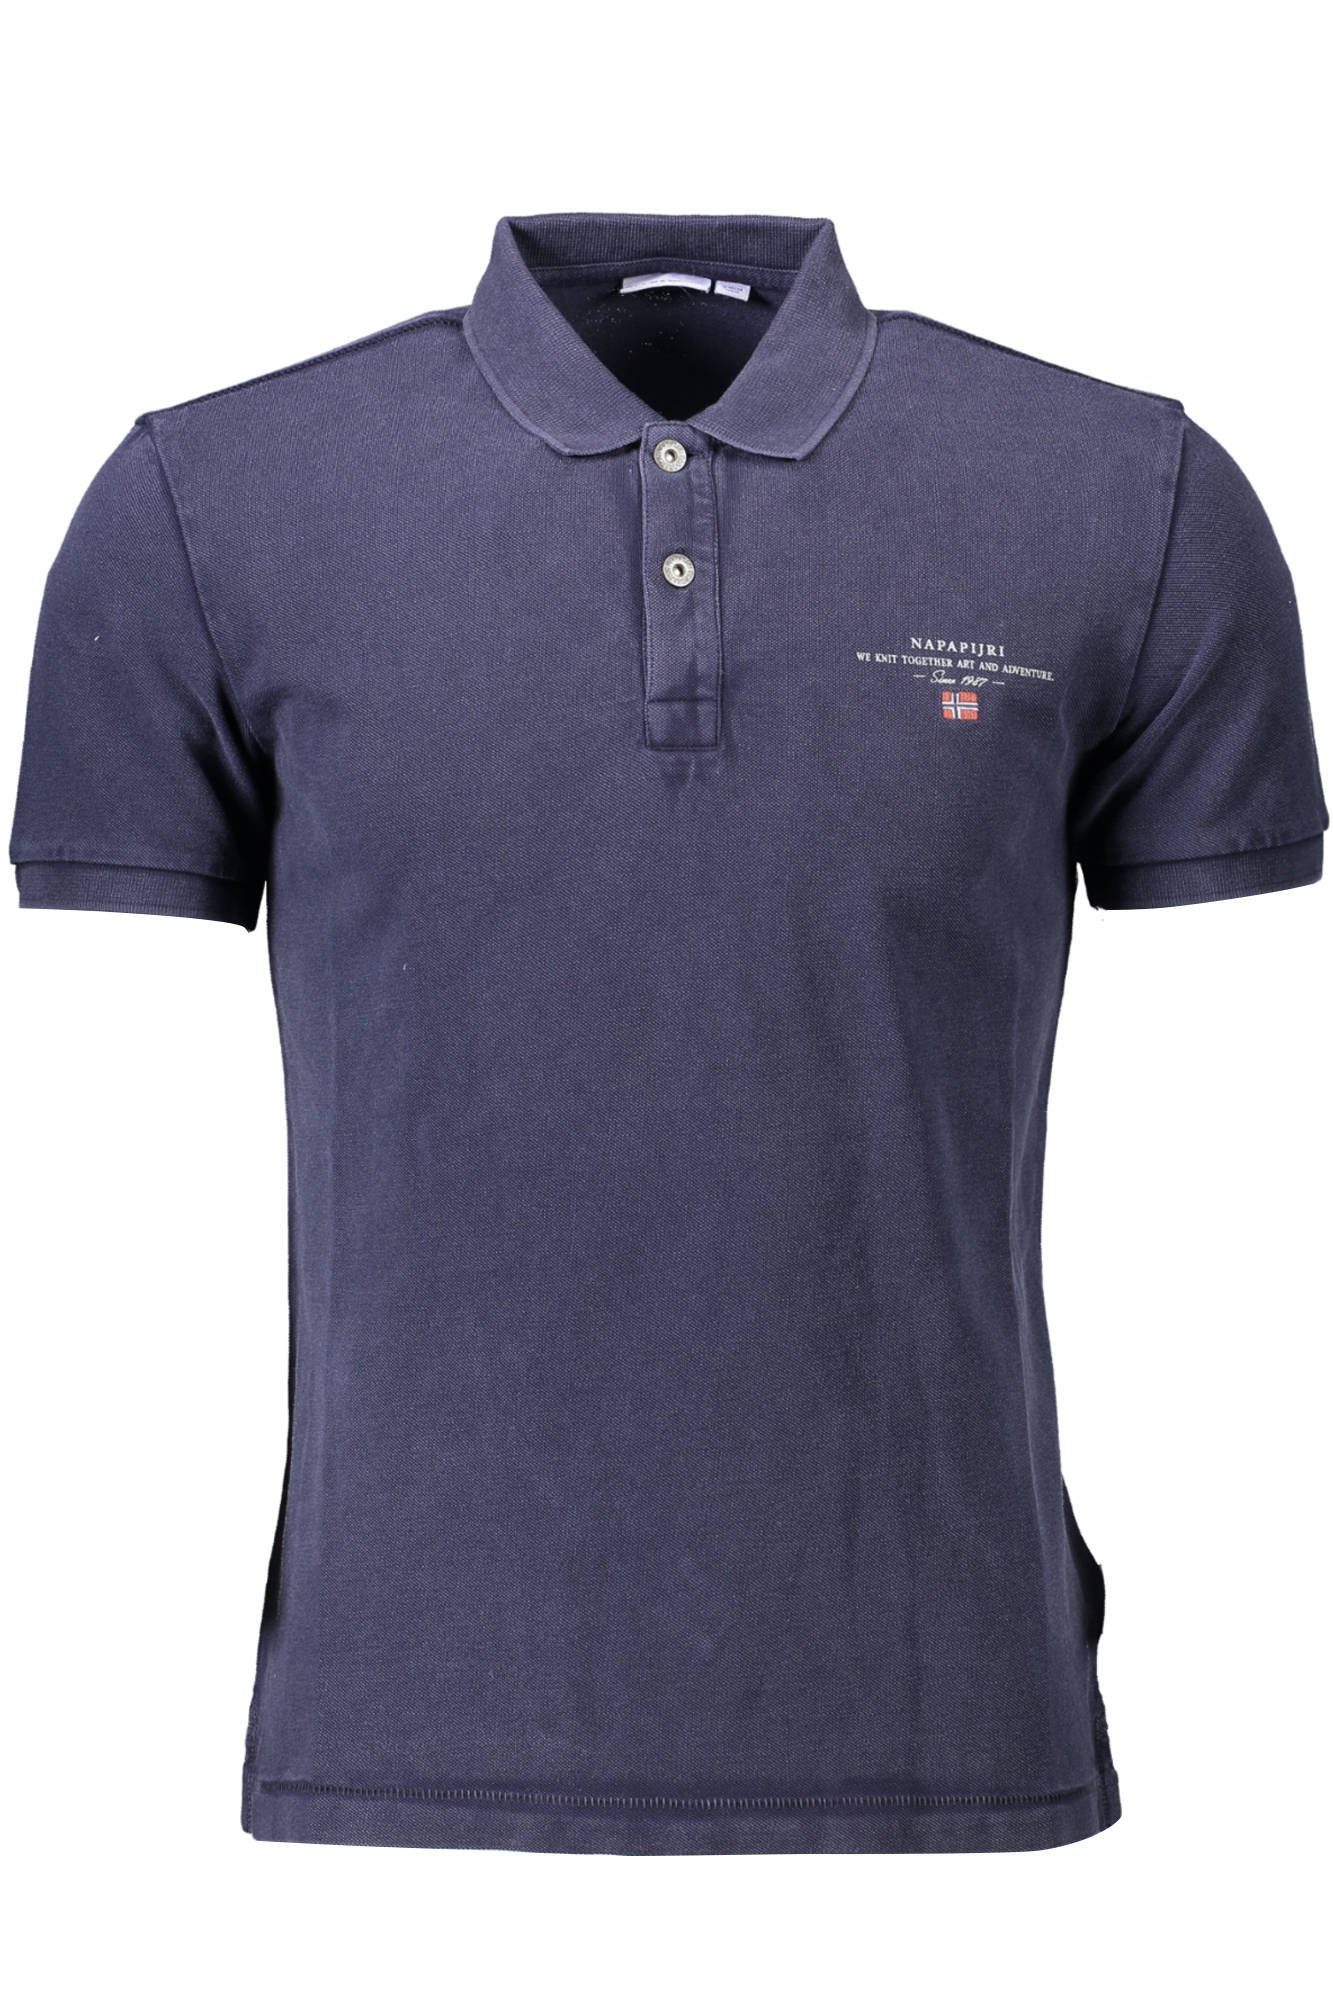 Napapijri Poloshirt kurzarm, Napapijri marine) Knöpfen Herren (176 Polohemd blu mit T-Shirt Poloshirt blau